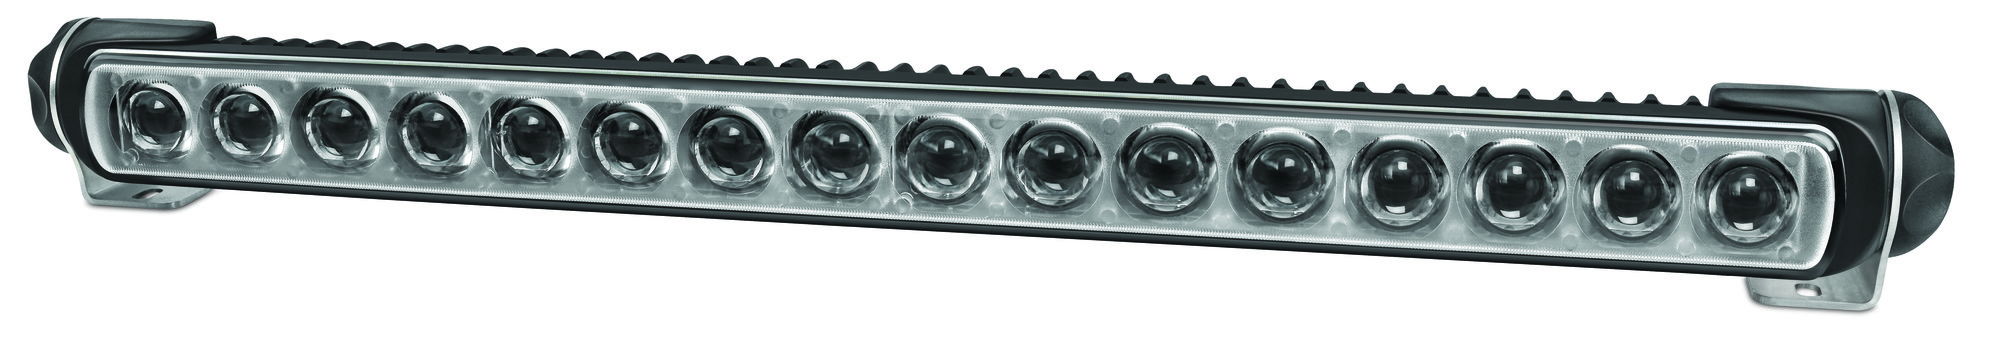 Hella 470 Series 19" LED Light Bars | Quadratec